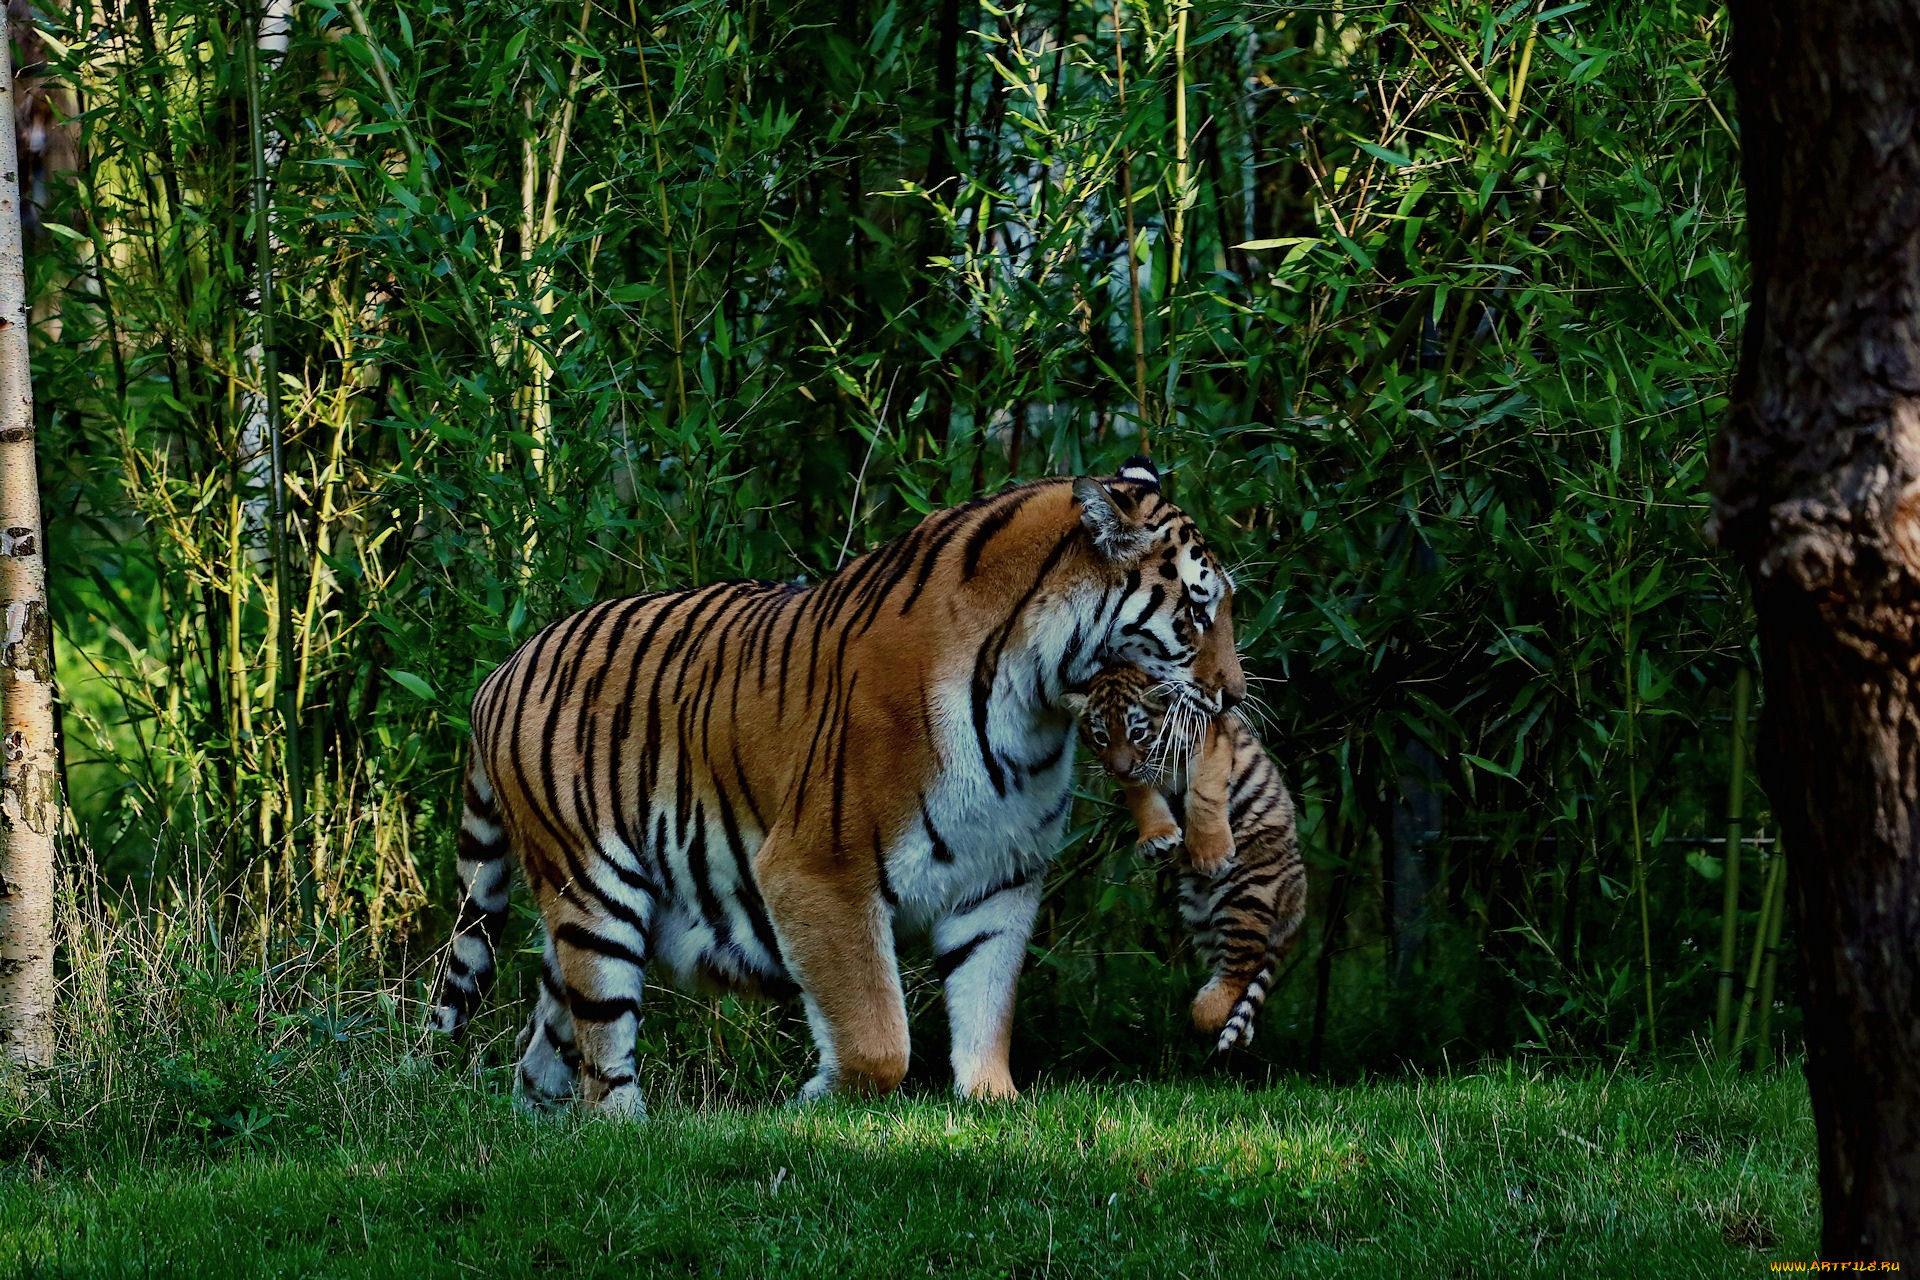 Jungle tiger. Тайгер тигр в джунглях. Тигр тропического леса Индии. Тигр в лесу. Тигр в тропиках.